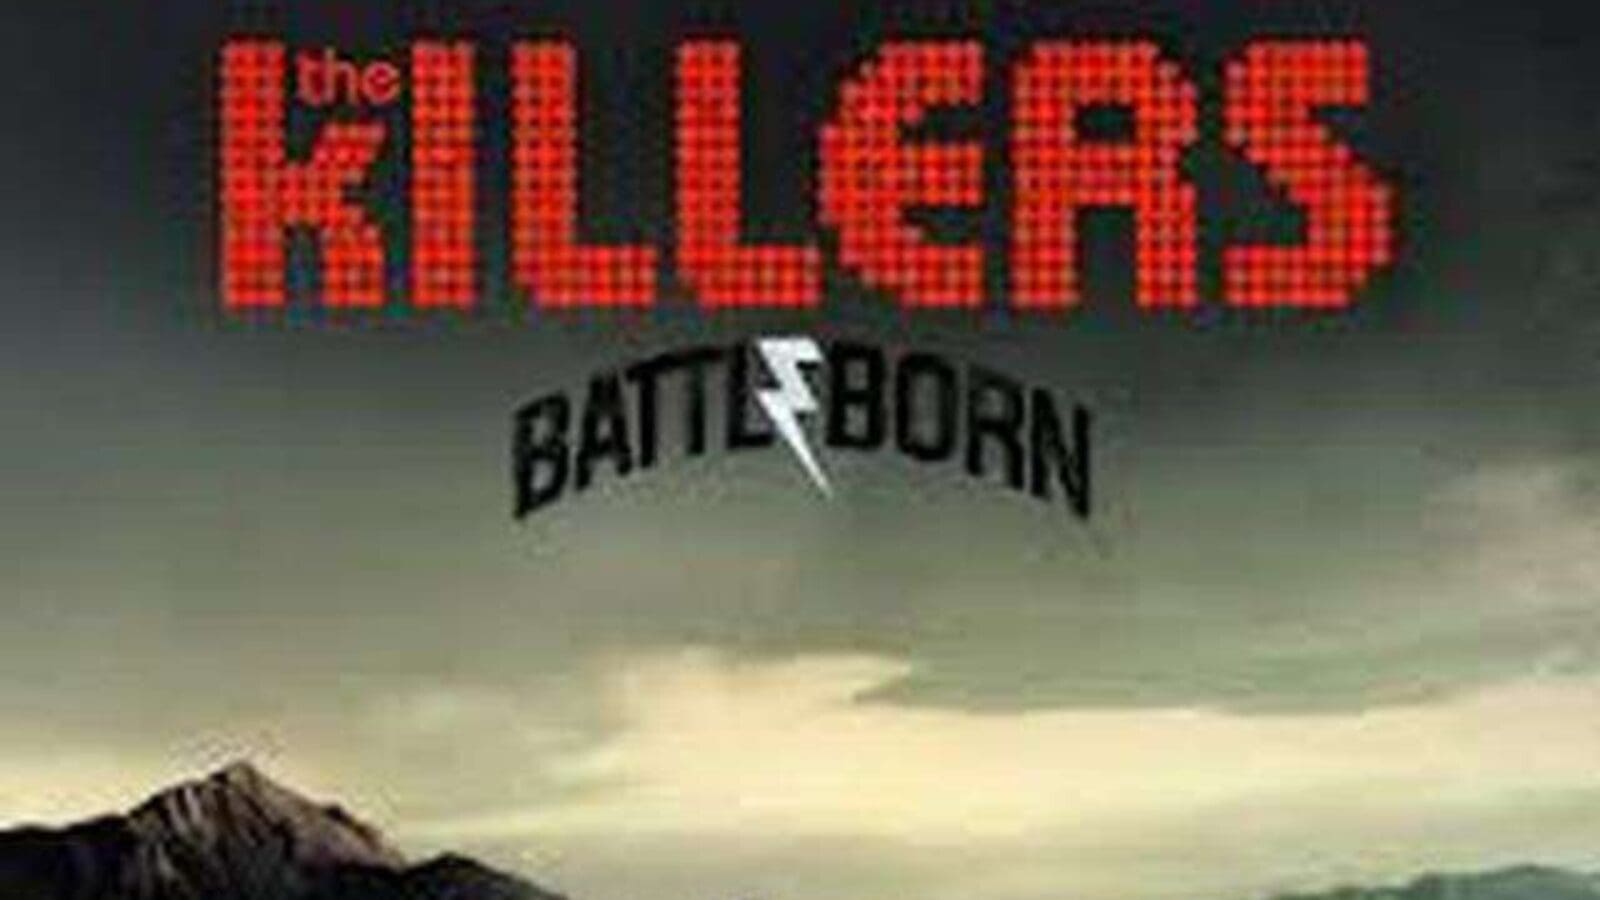 THE KILLERS – Battle Born